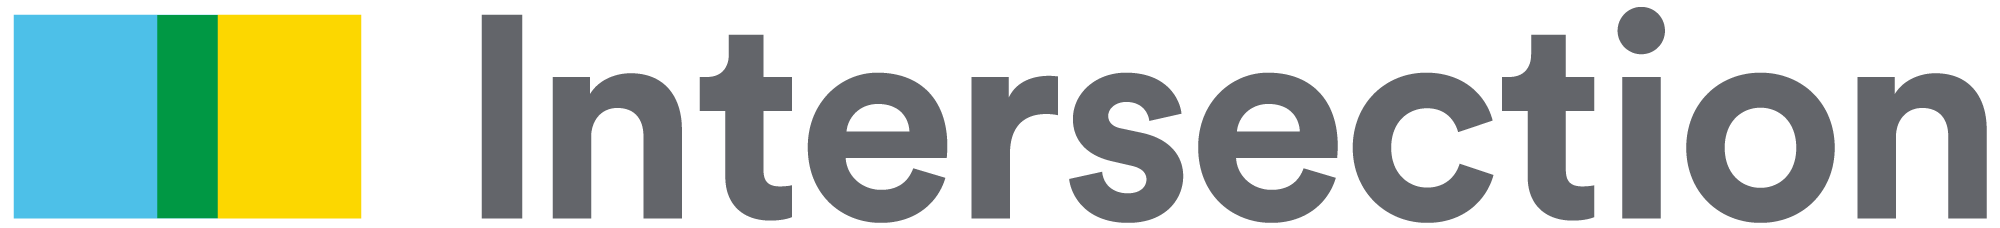 Intersection InSites logo